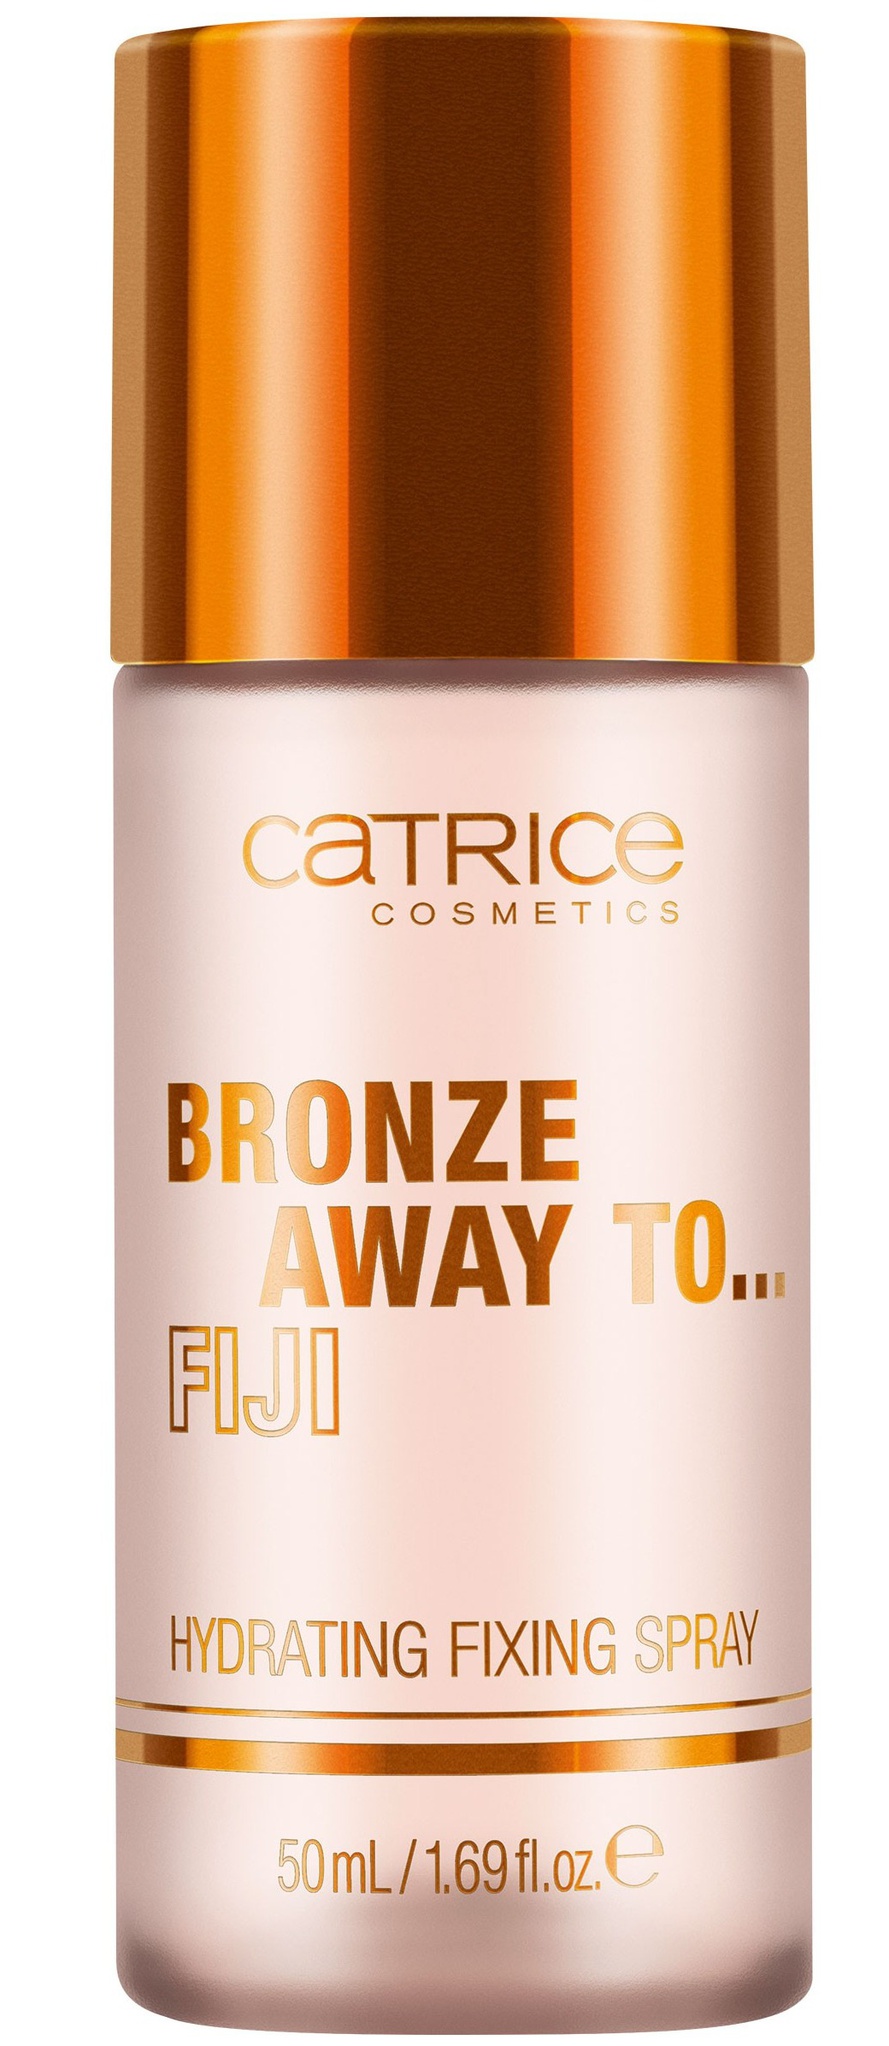 Catrice Bronze Away To... Hydrating Fixing Spray